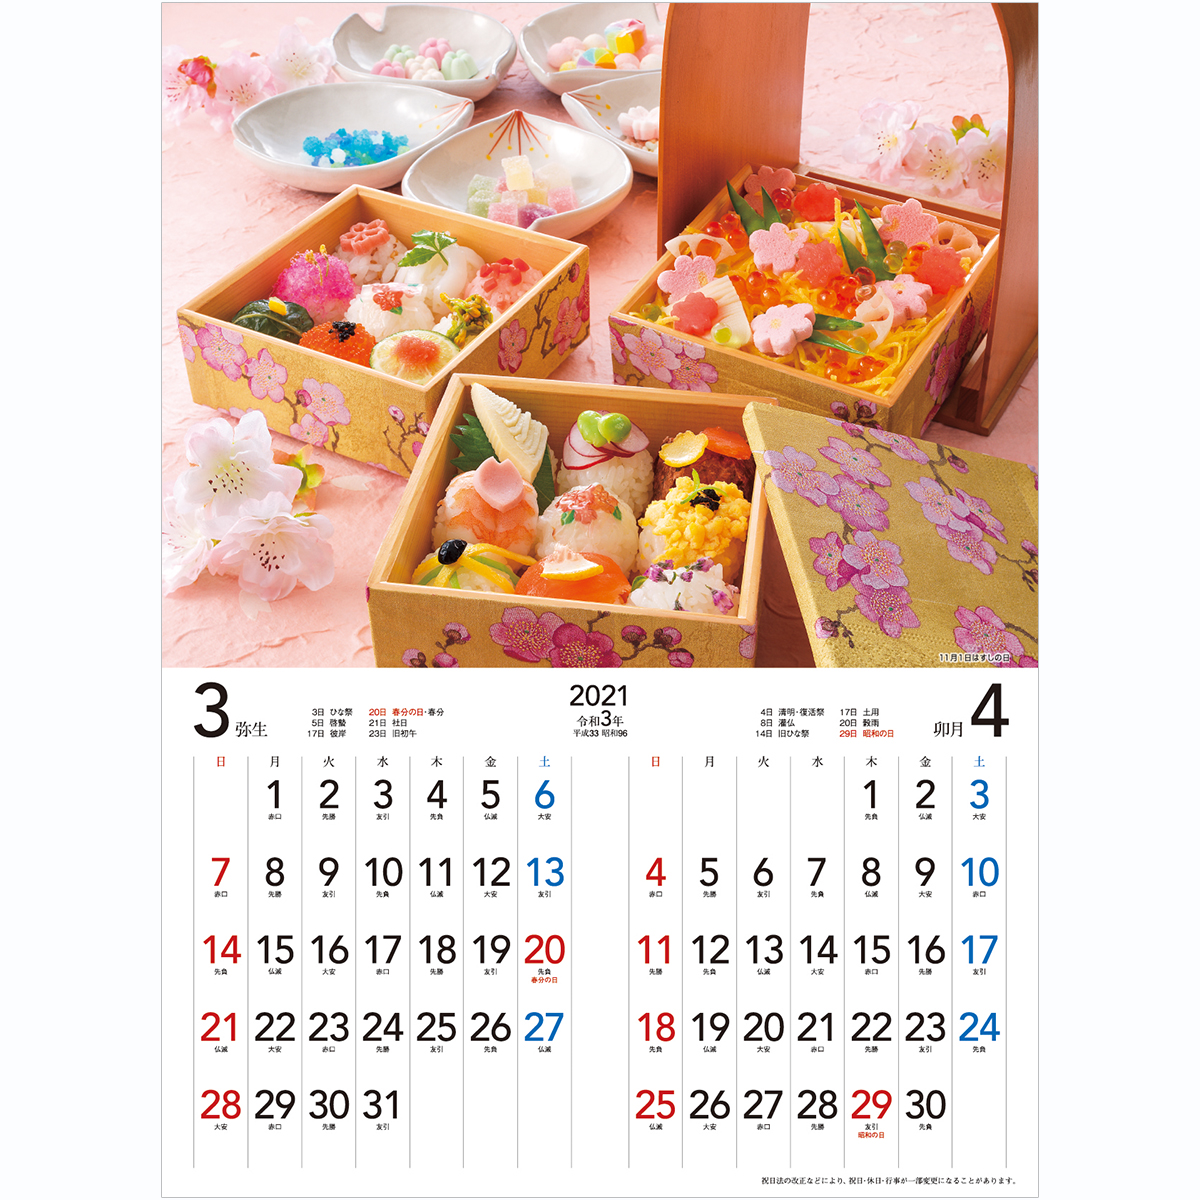 Sg121 寿司カレンダー 21年カレンダー その他 名入れカレンダー製作所 累計35 000社突破